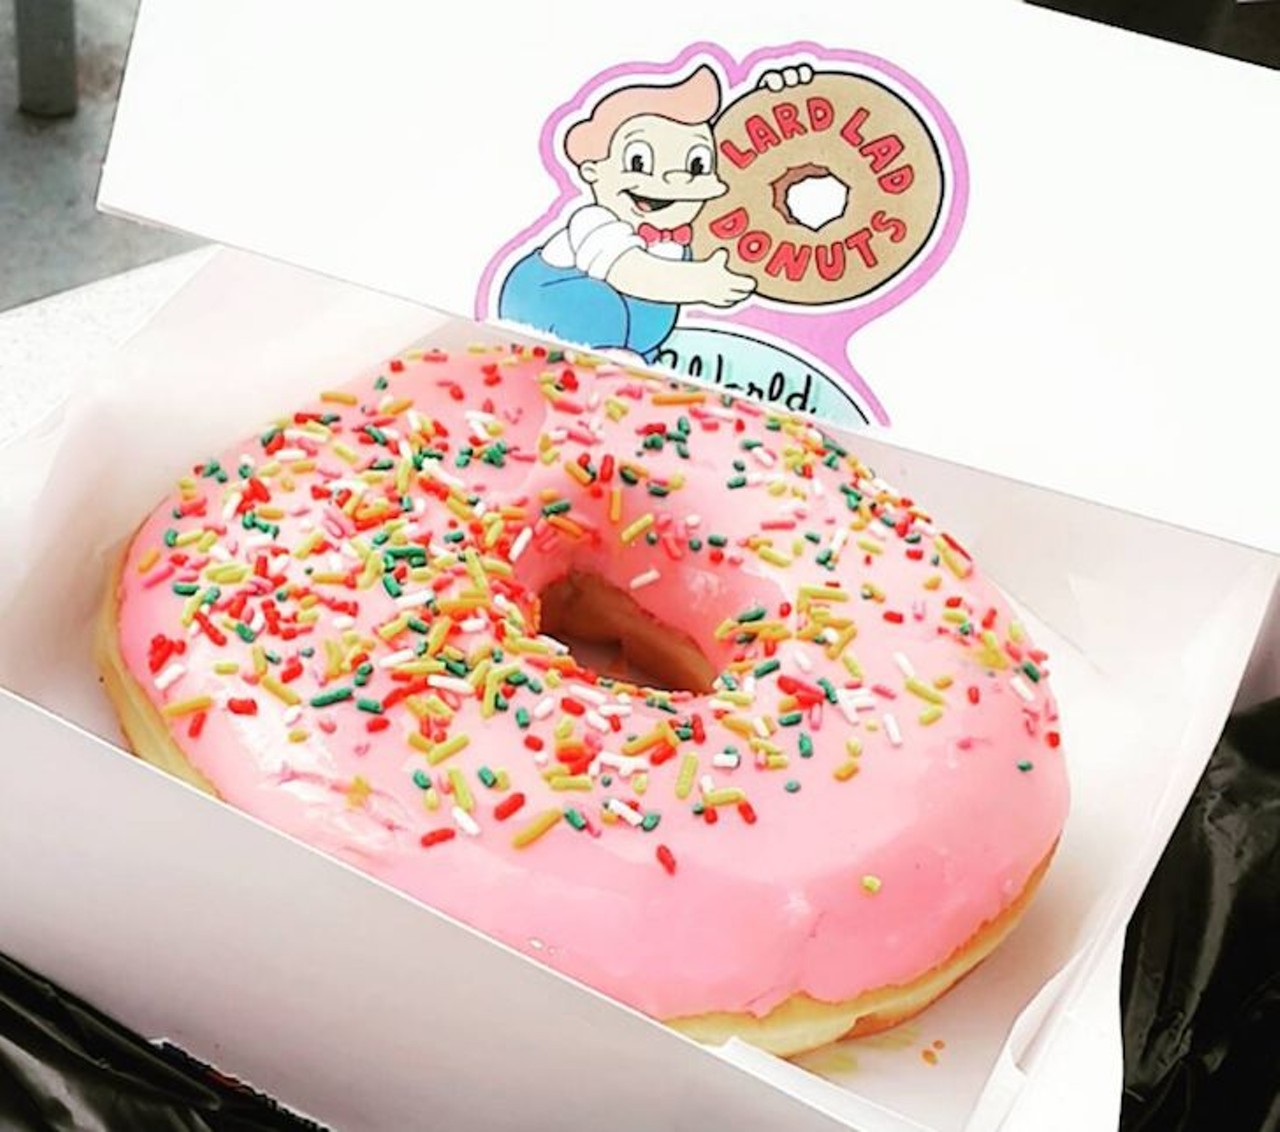 Must try: Lard Lad Donut 
Photo via aall.is.onn/Instagram